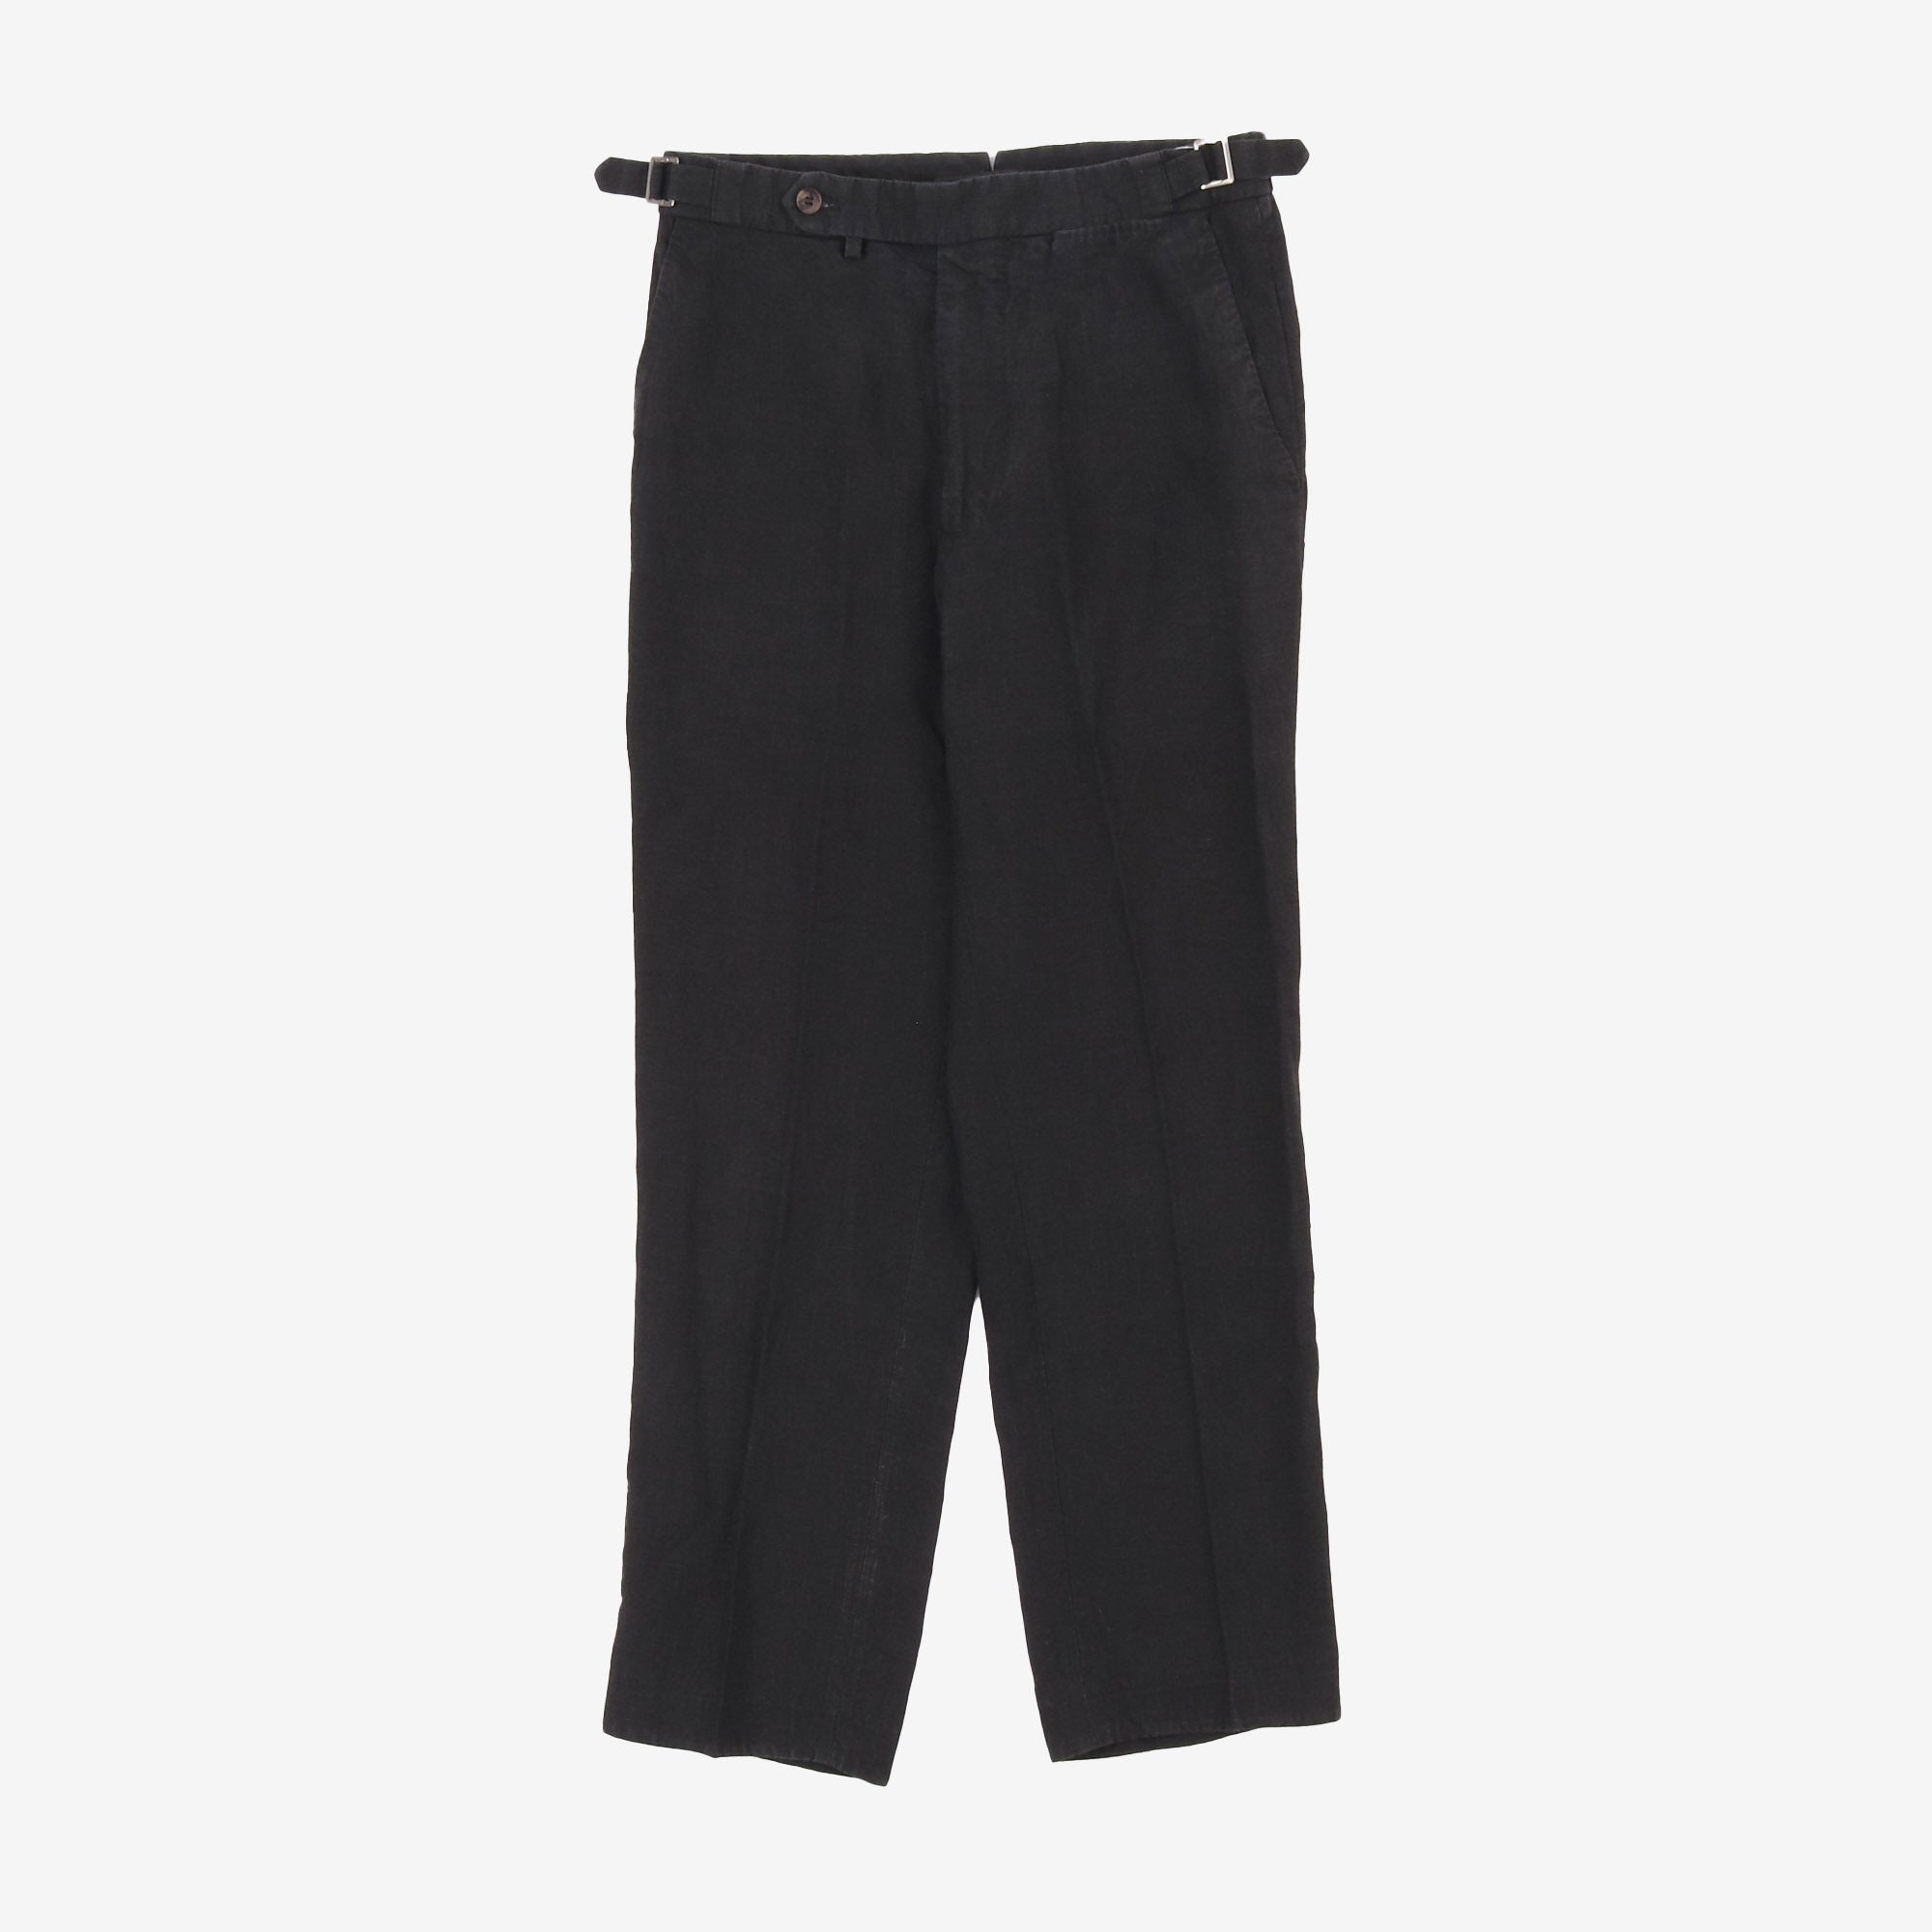 Linen Trousers (29W x 26L)